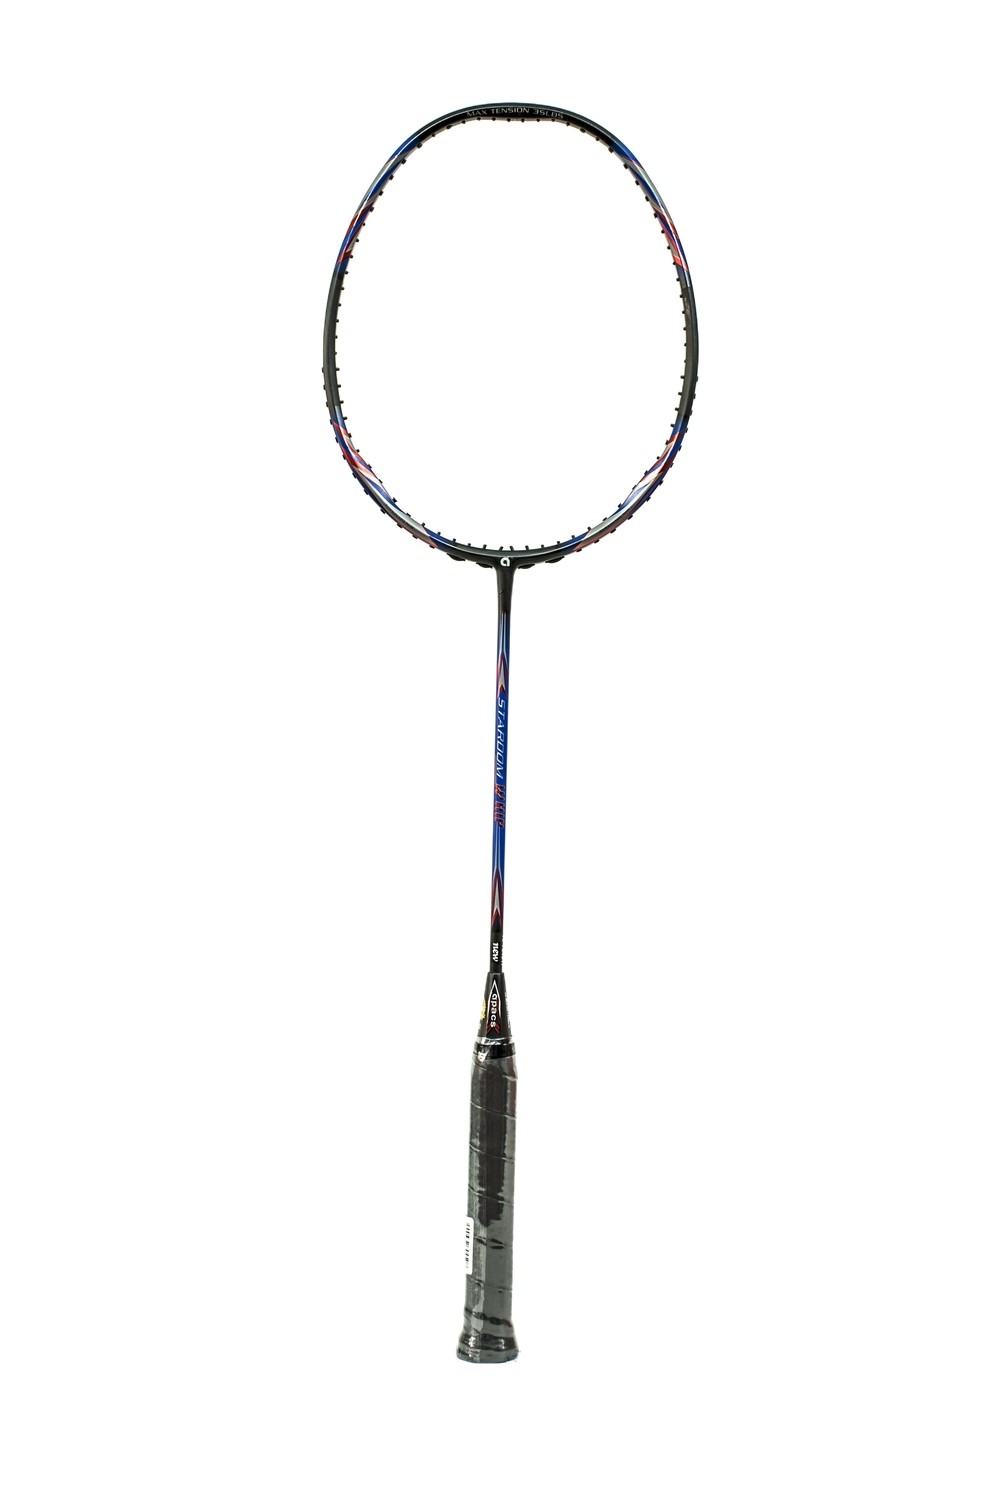 Apacs Stardom Whip Badminton Racquet